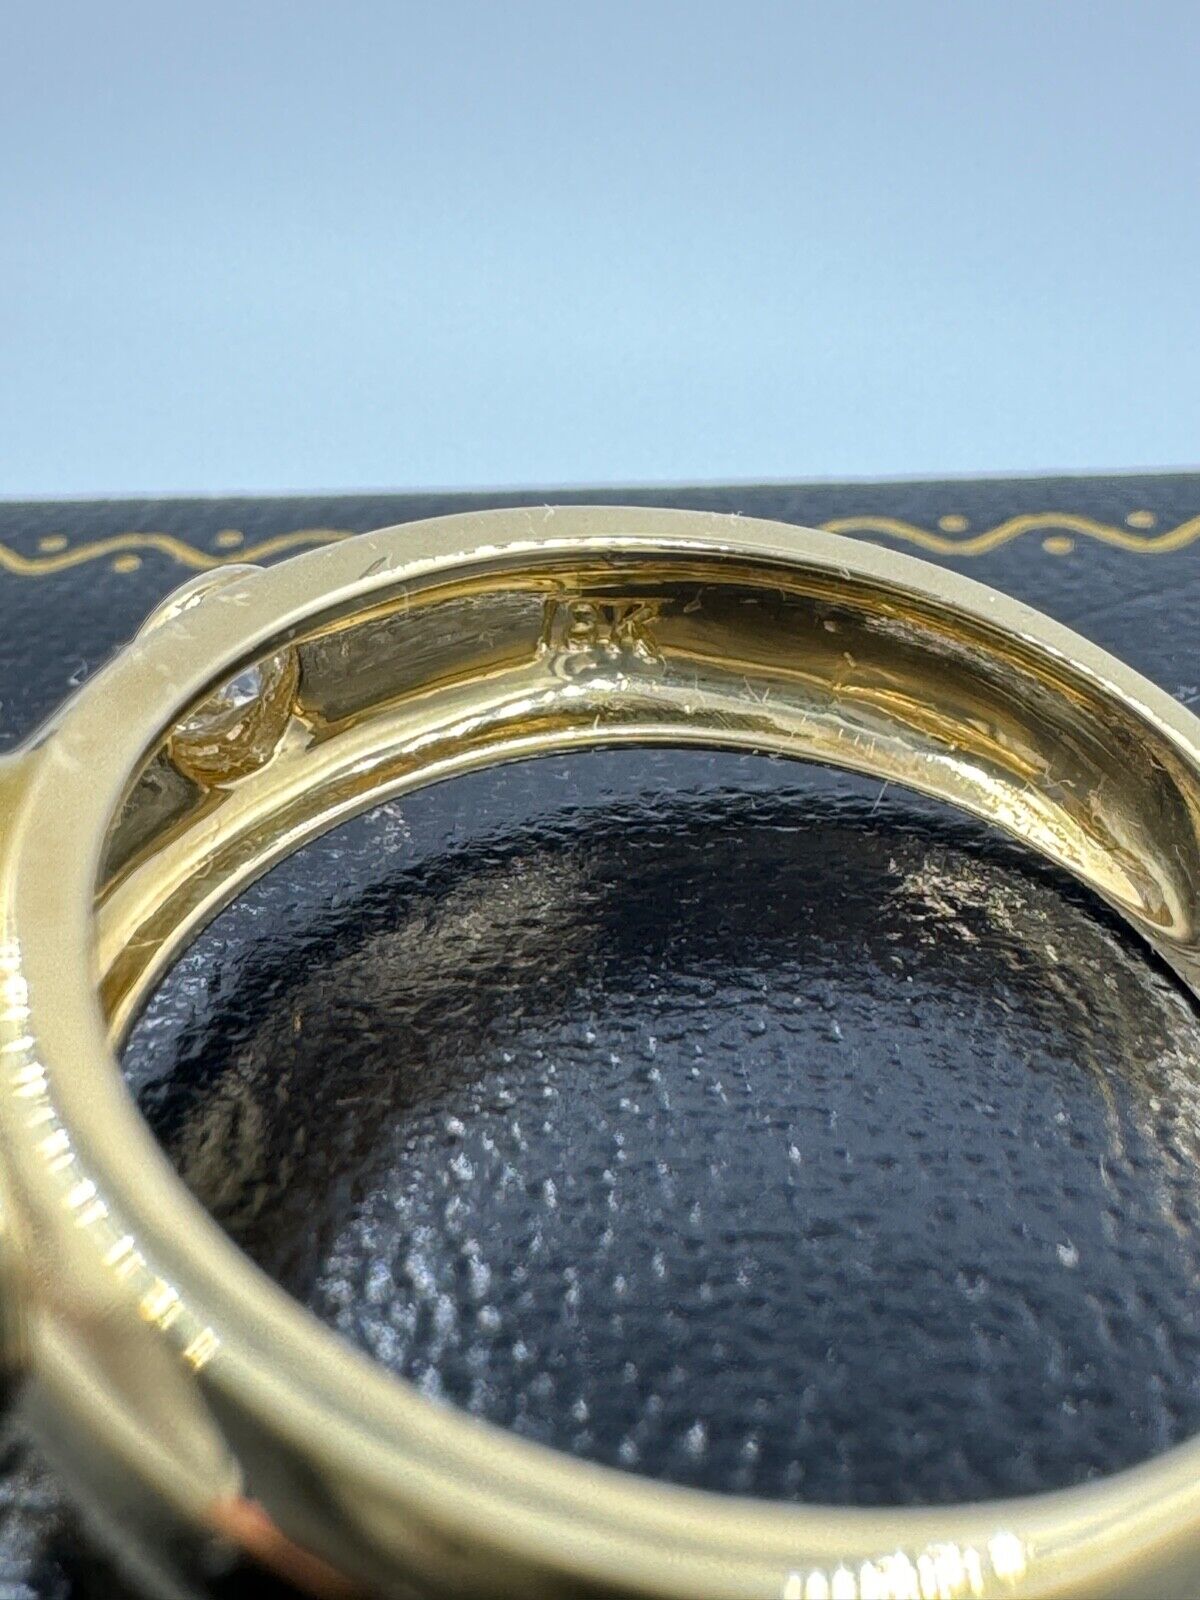 Estate Cabochon Sapphire Diamond Yellow Gold Ring 18K